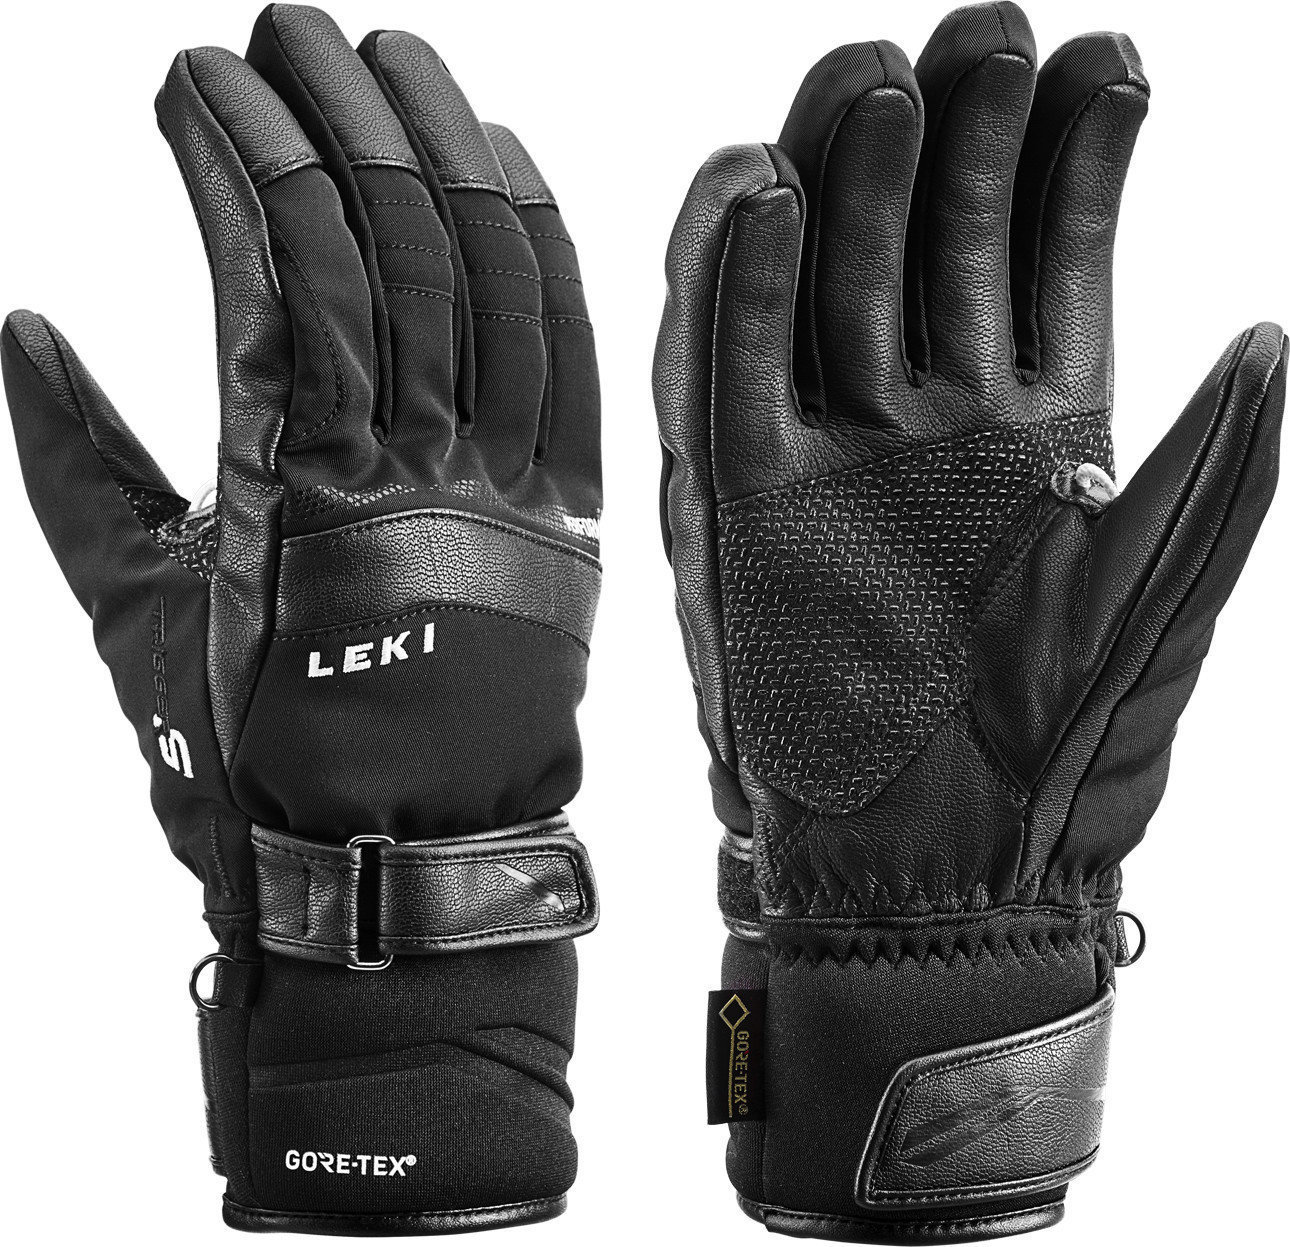 SkI Handschuhe Leki Performance S GTX Black 10,5 SkI Handschuhe